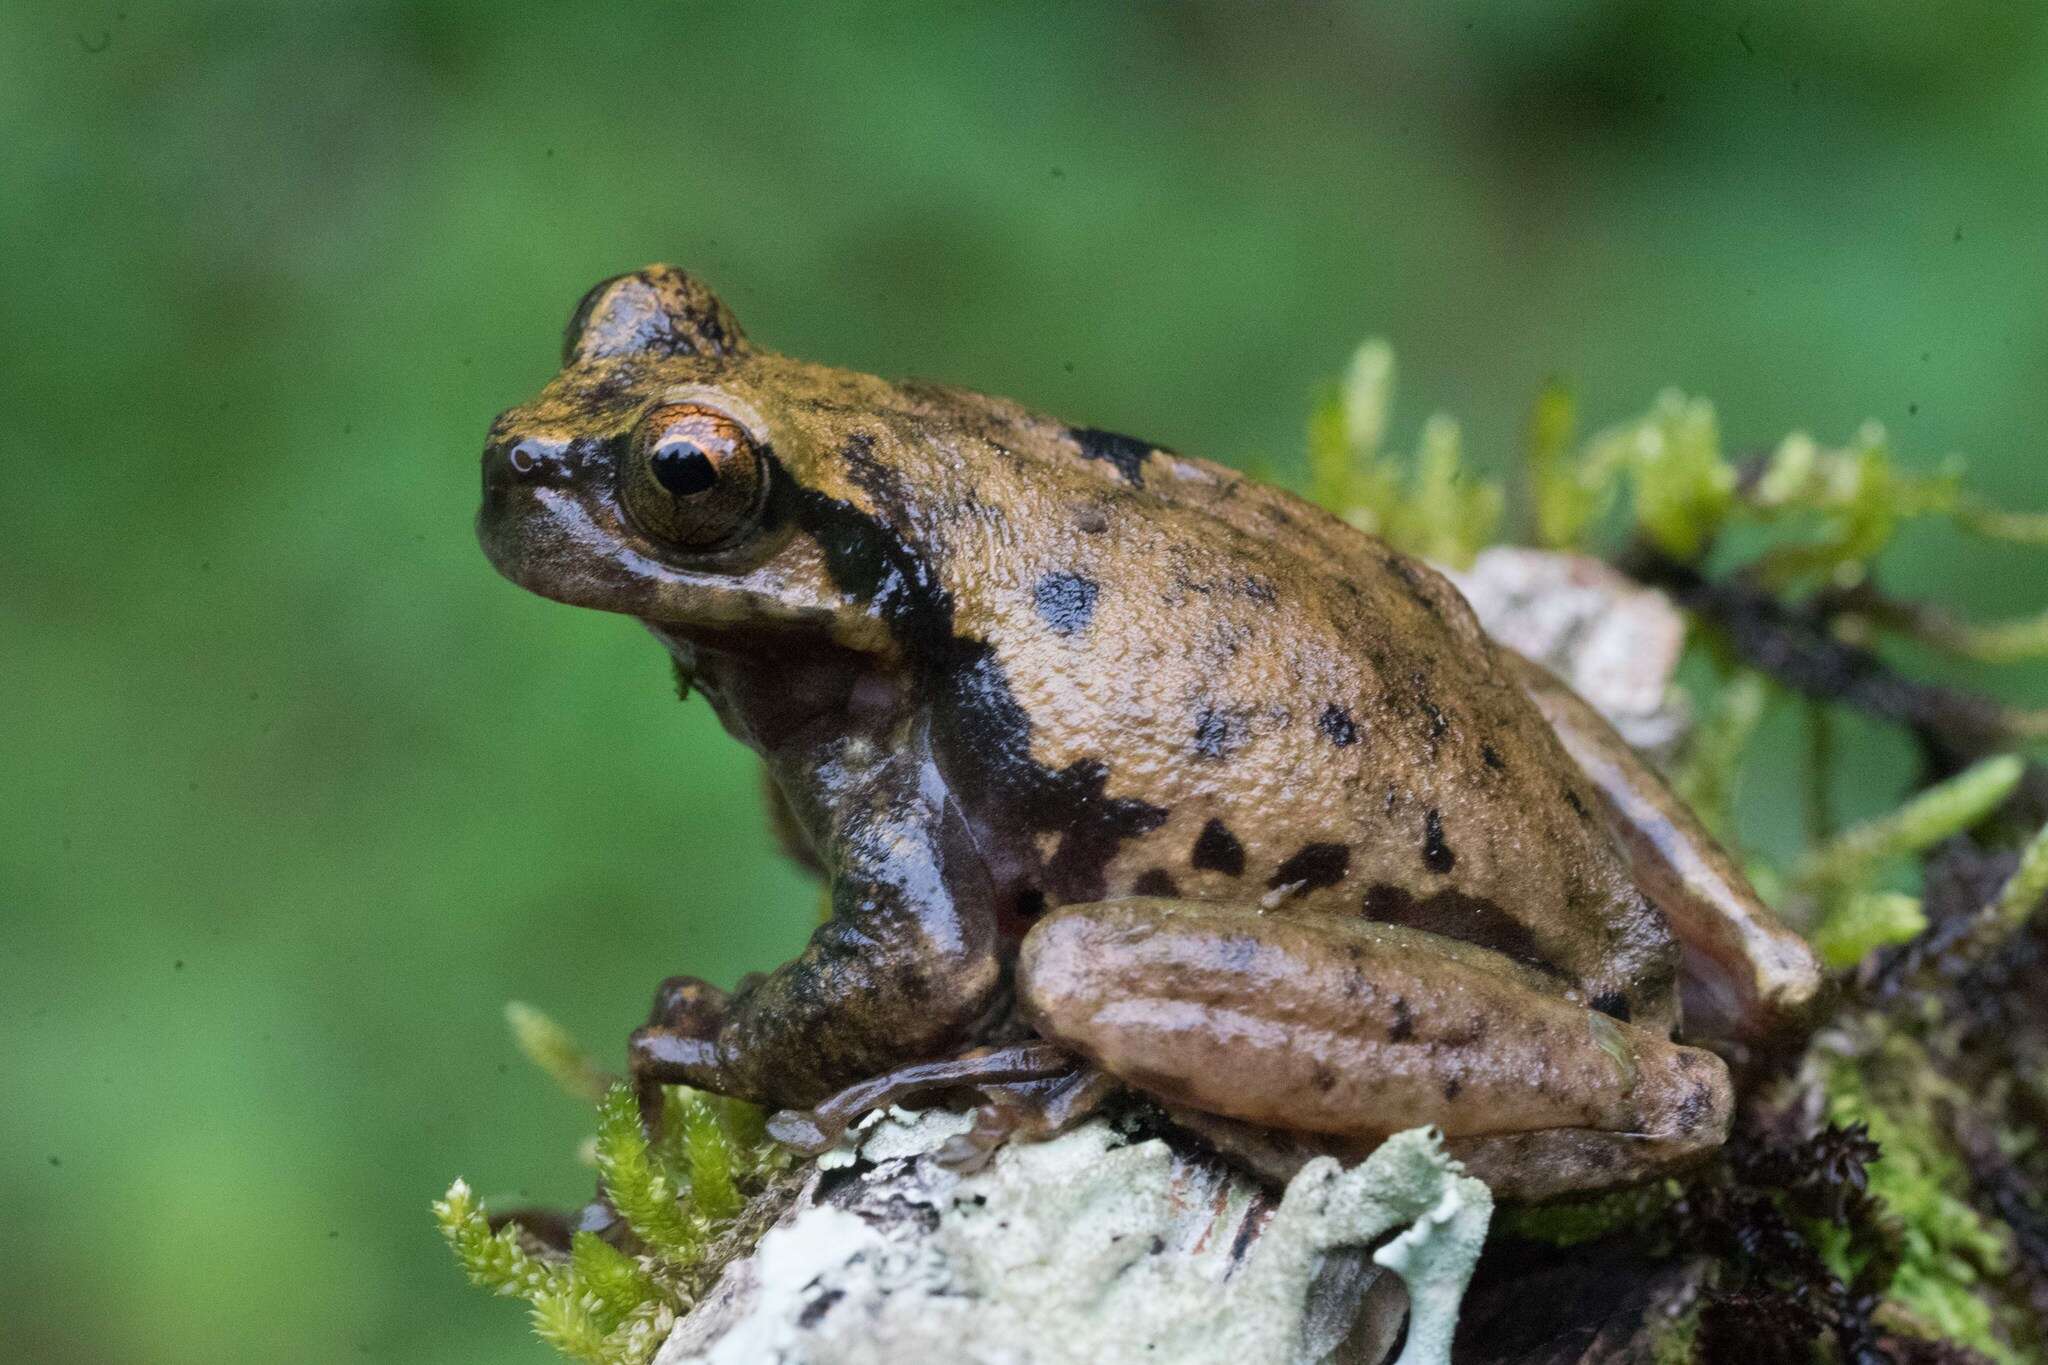 Image of Matuda’s Spikethumb Frog